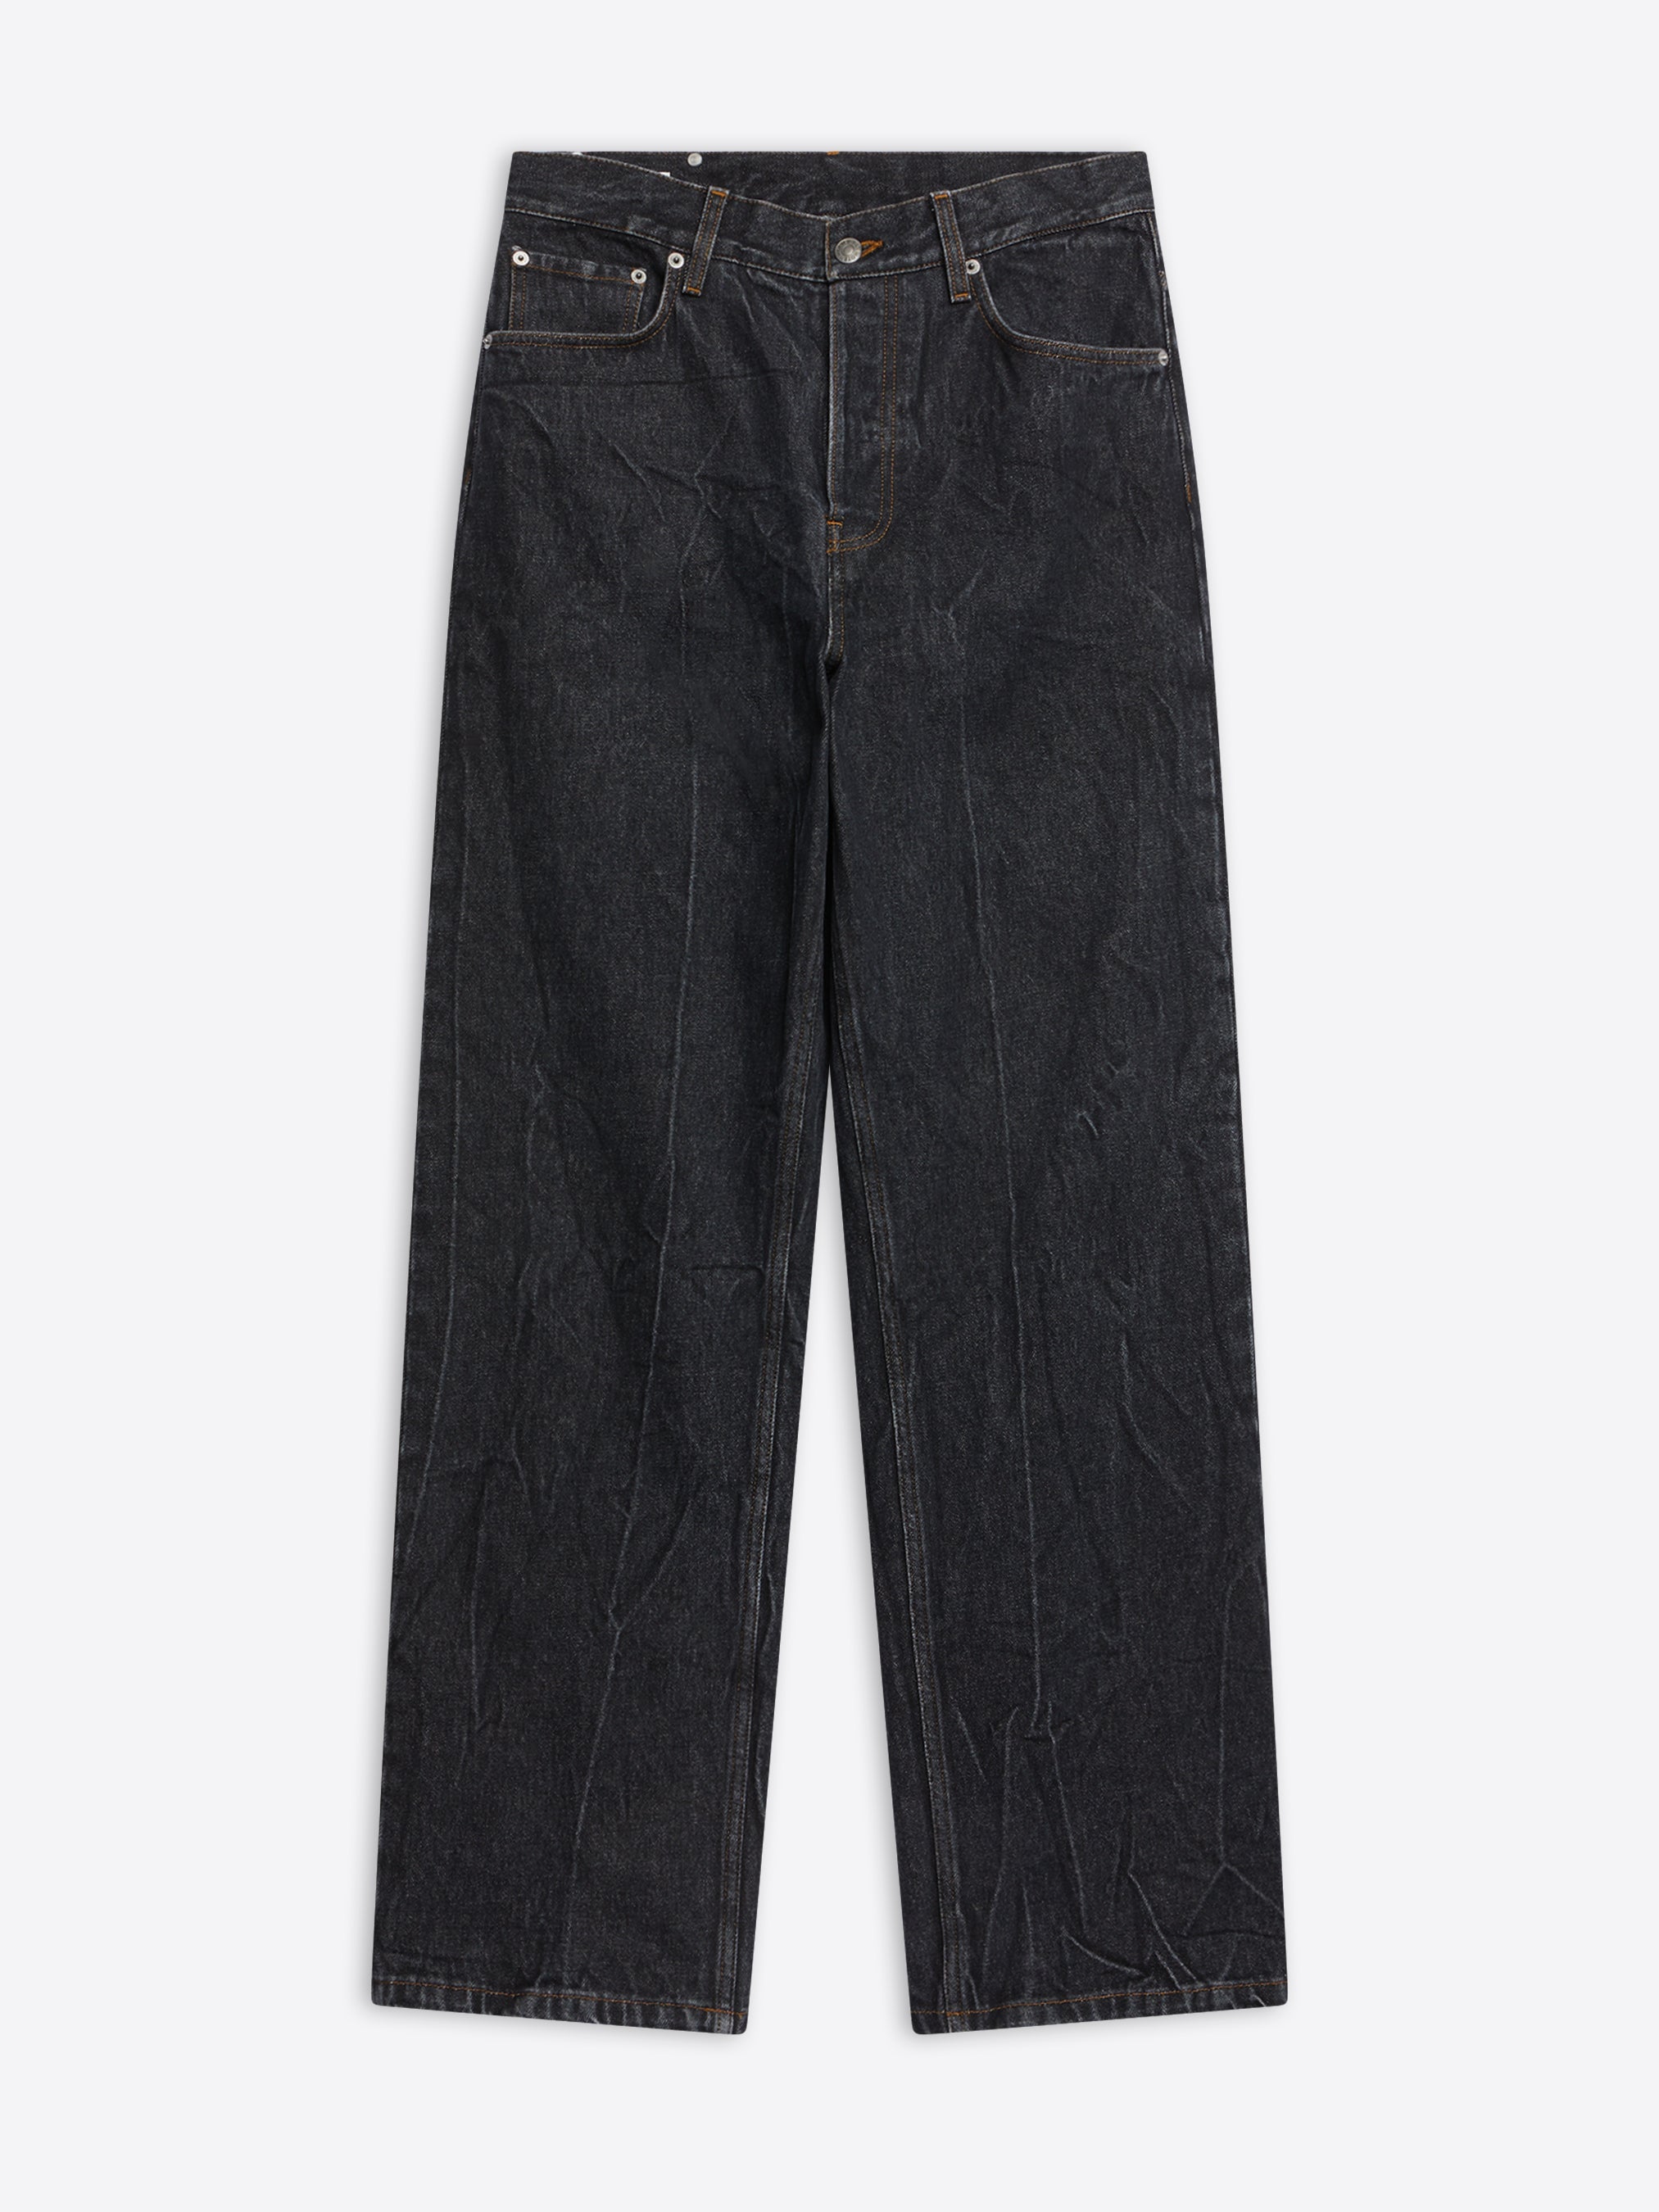 NWT American Apparel Women's Size 27 High-Waist Jean Medium Marble Wash  Jeans | eBay